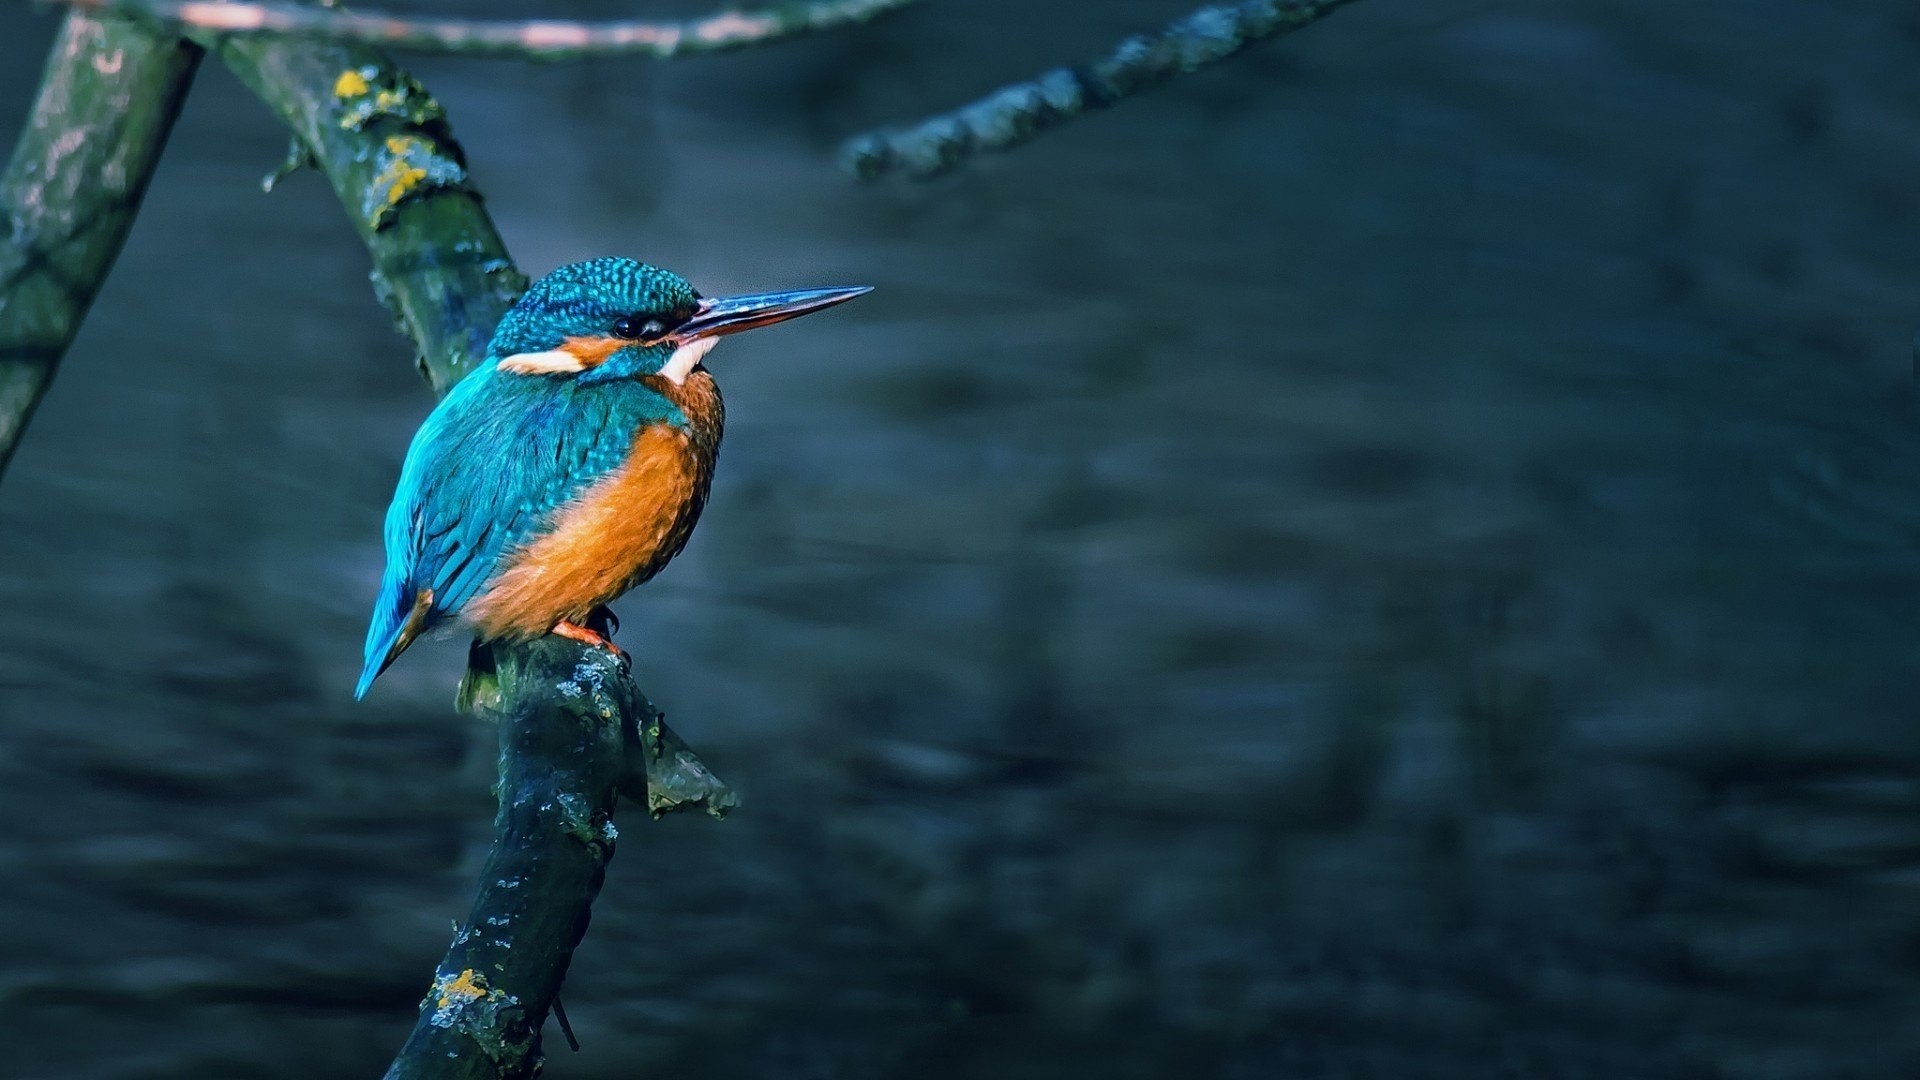 Kingfisher Image